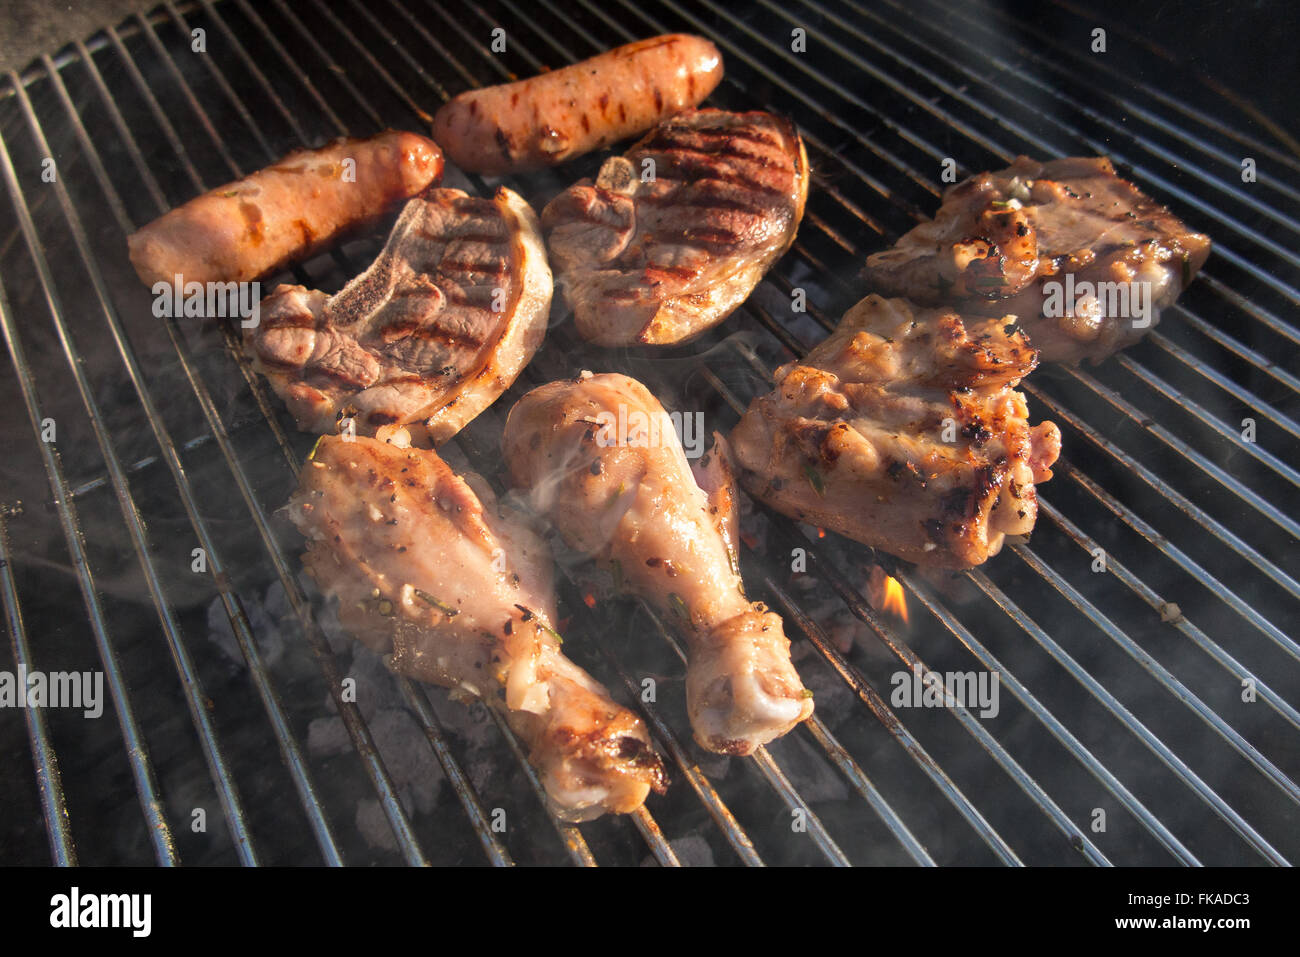 Griller la viande sur le barbecue, NotonFest, Milborne Port, Somerset, England, UK Banque D'Images